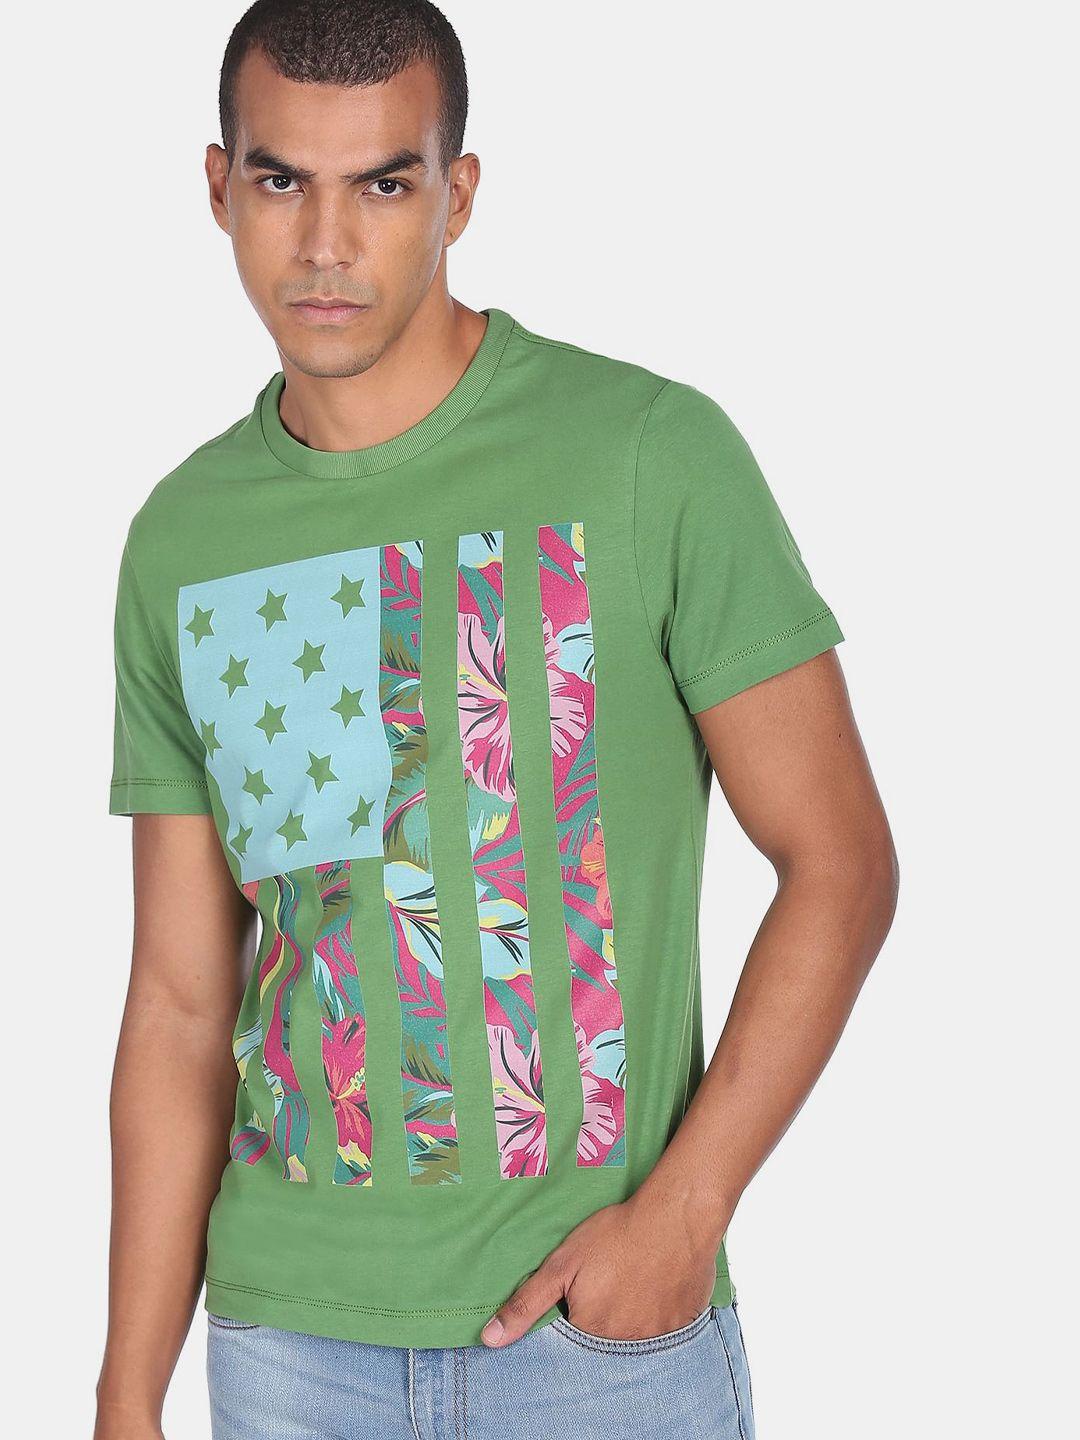 u.s. polo assn. denim co.men green printed t-shirt